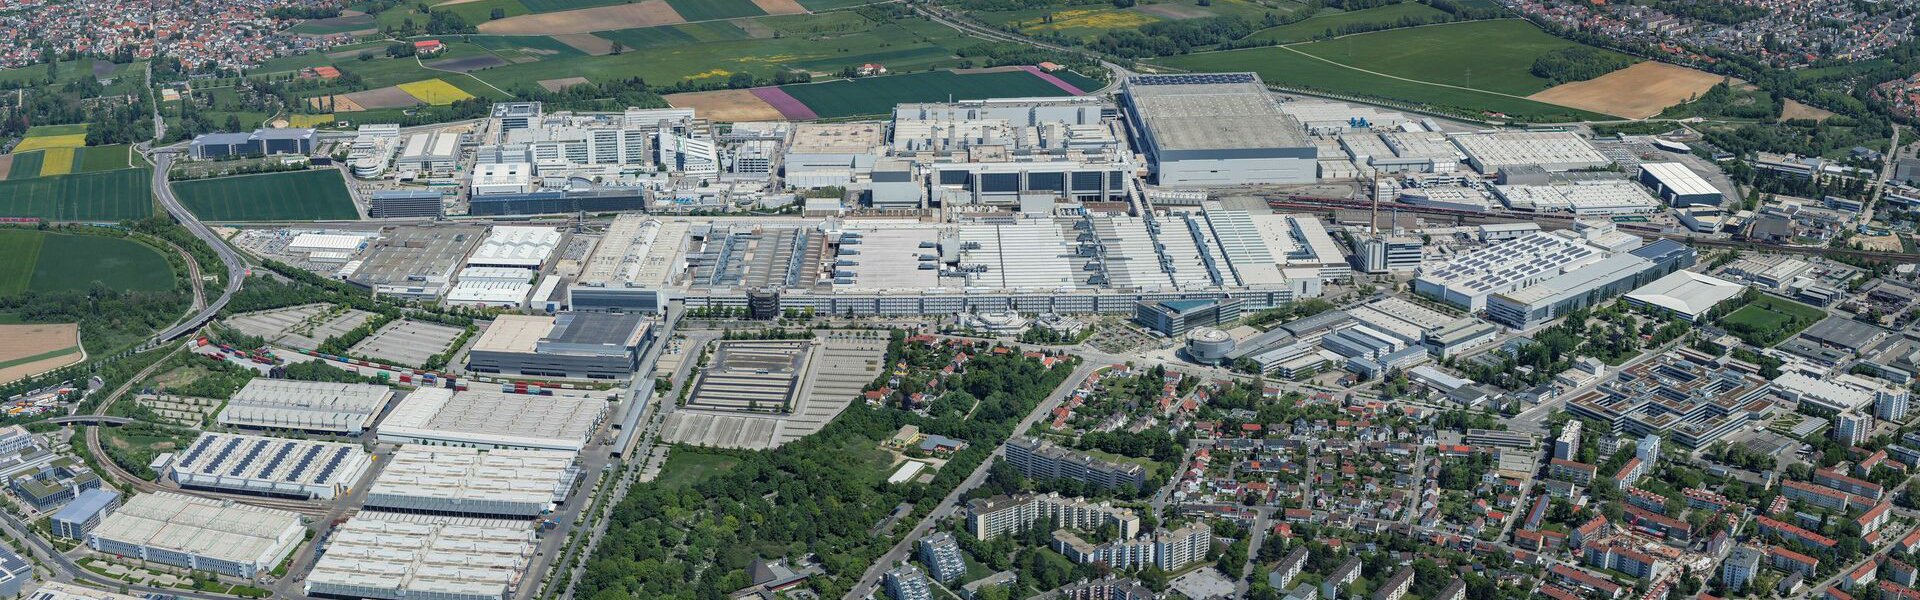 Tovarna Audi Ingolstadt.